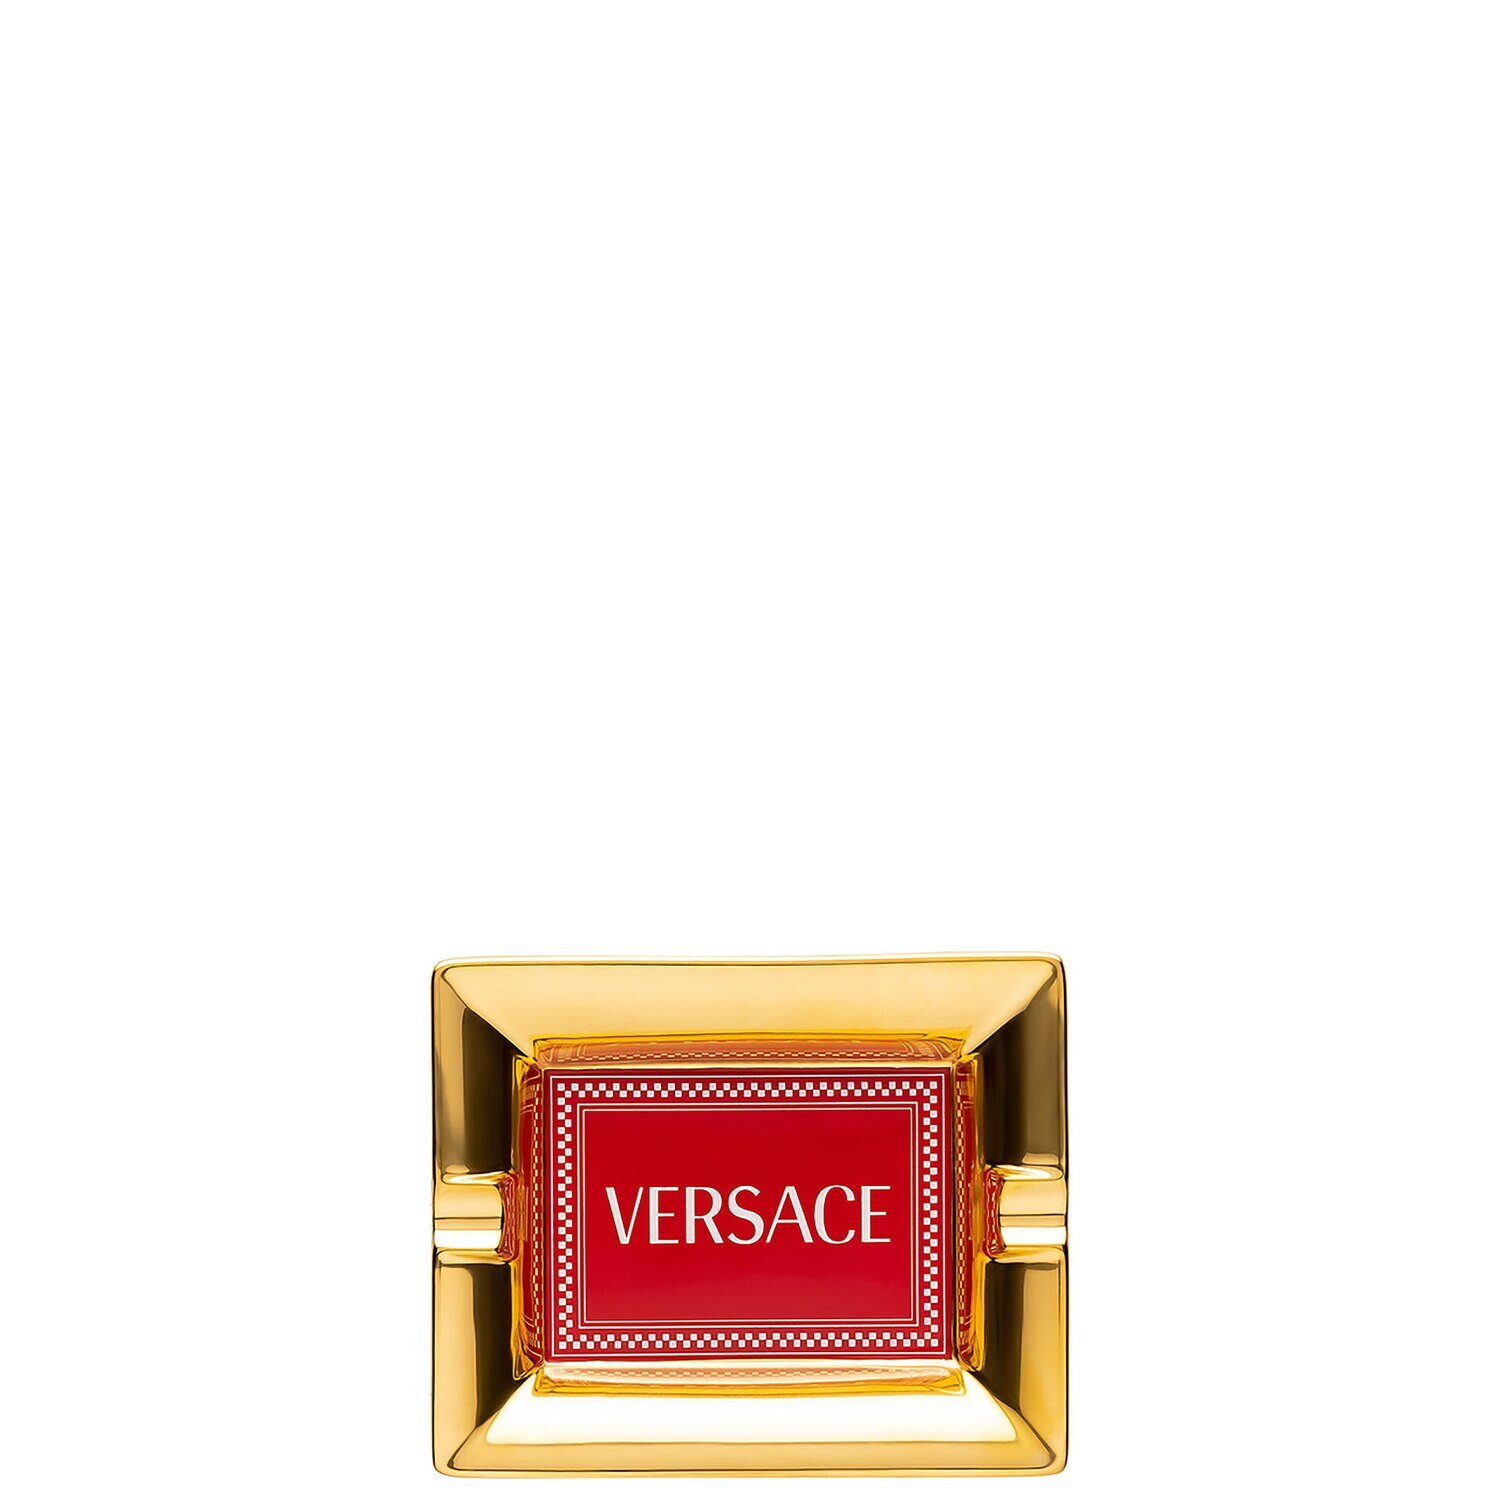 Versace Medusa Rhapsody Red Ashtray 5 Inch